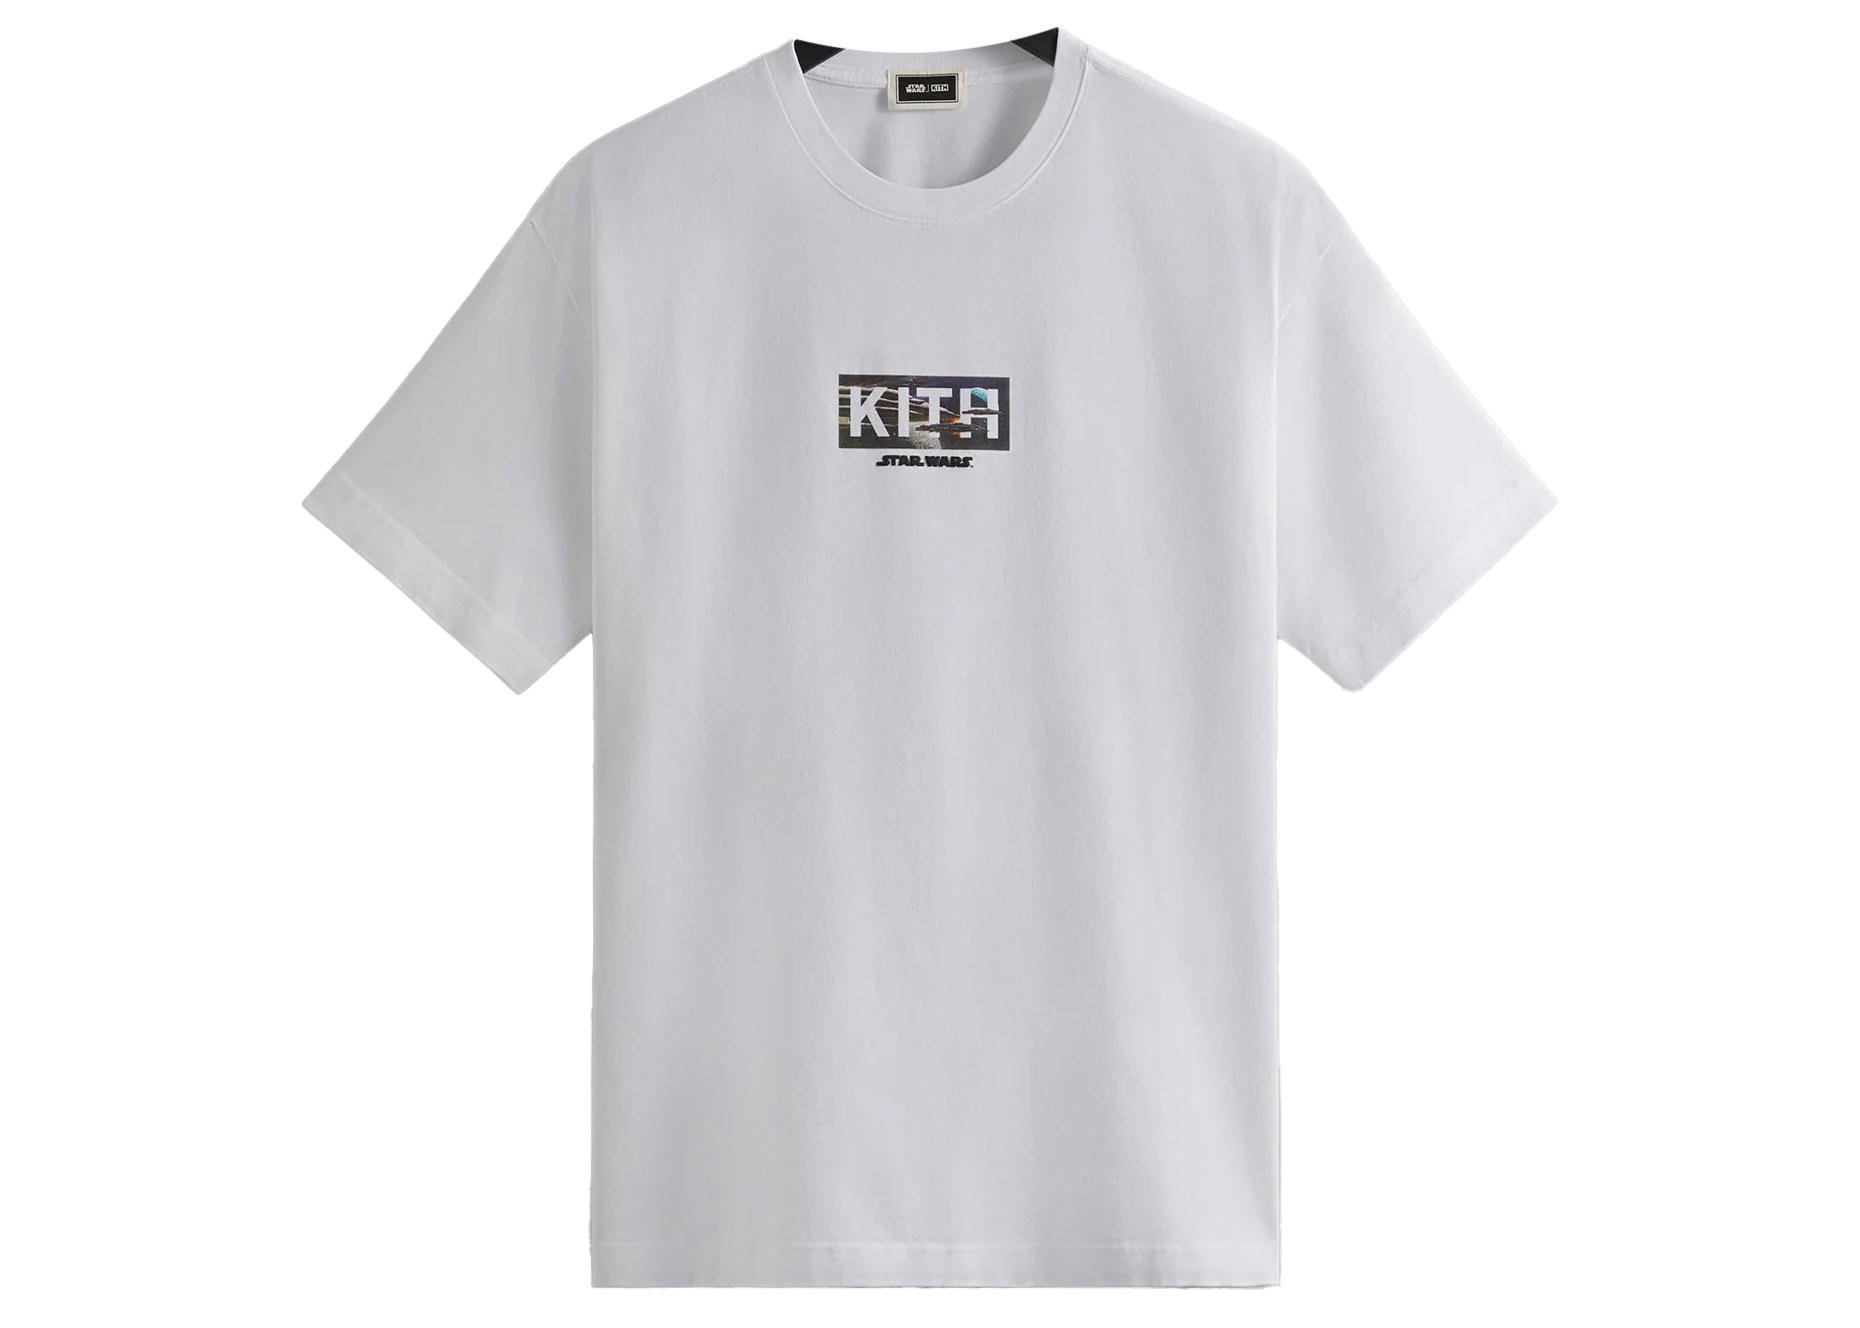 Kith x STAR WARS Concept Tee "White" L